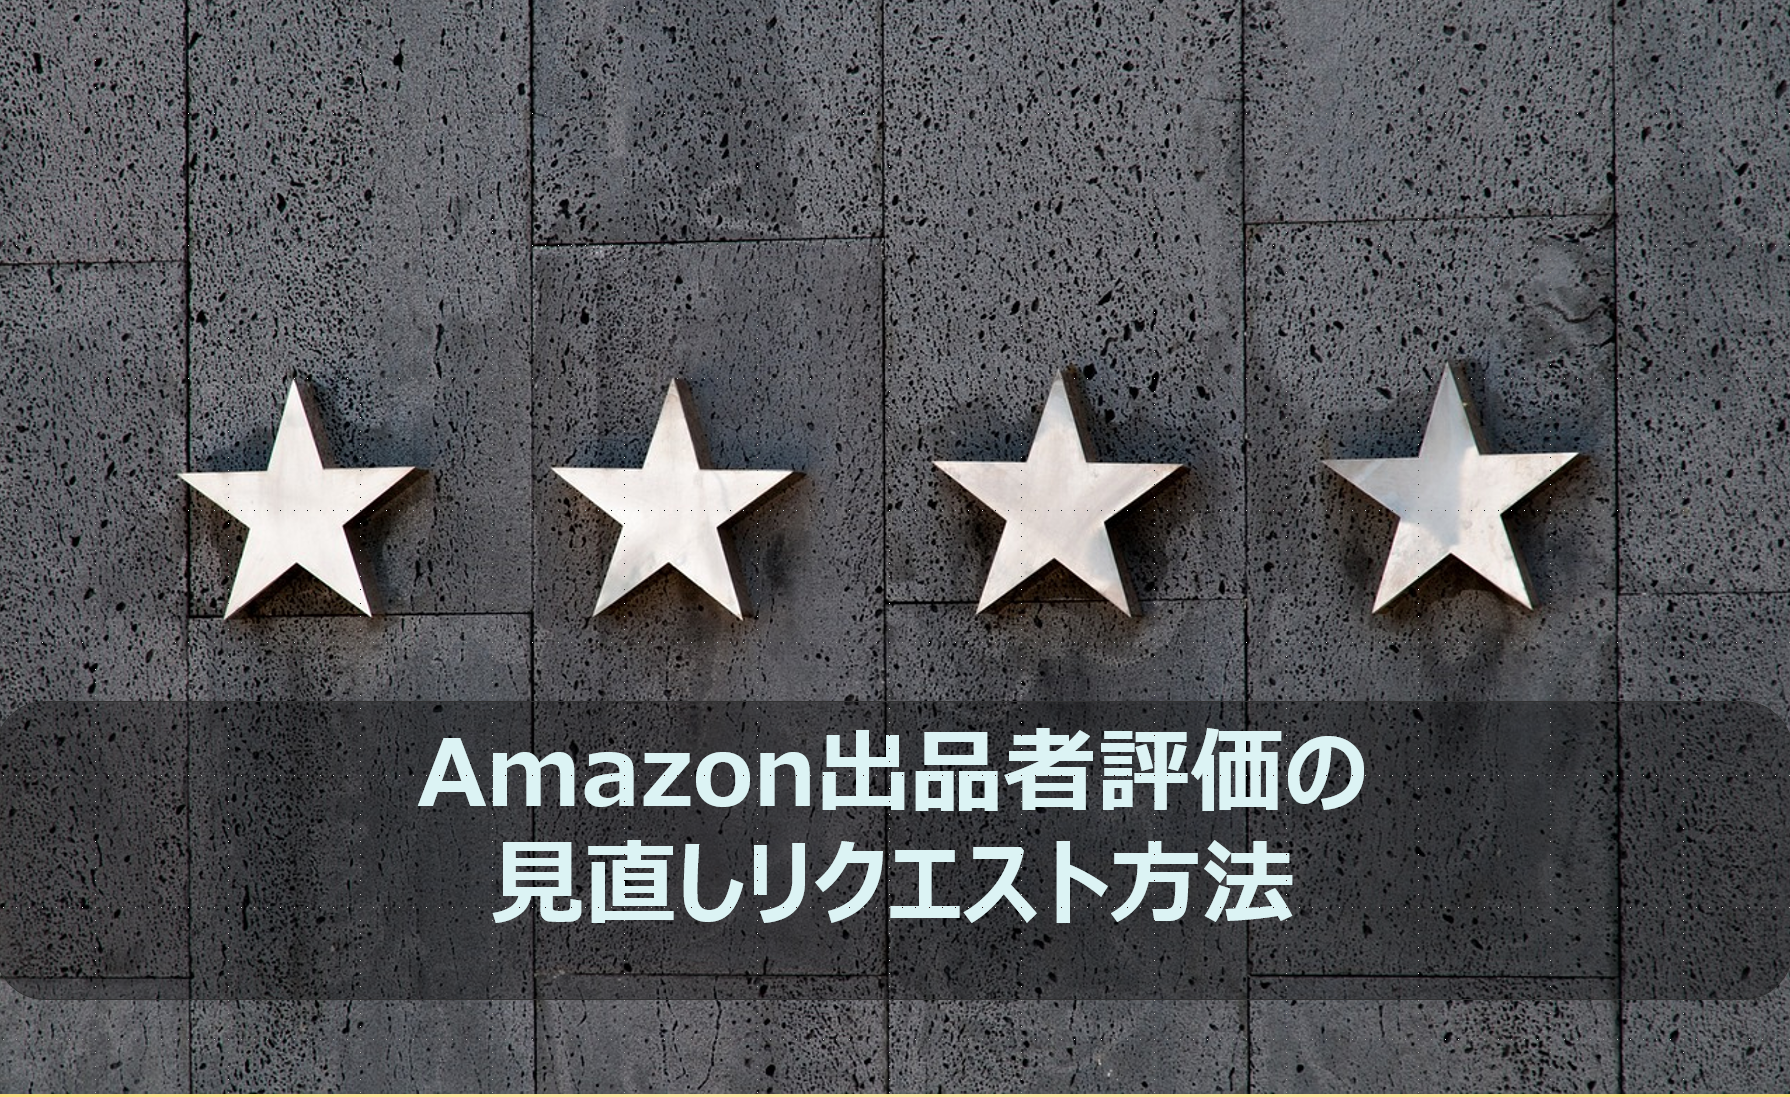 Amazon出品者評価の見直しリクエスト方法